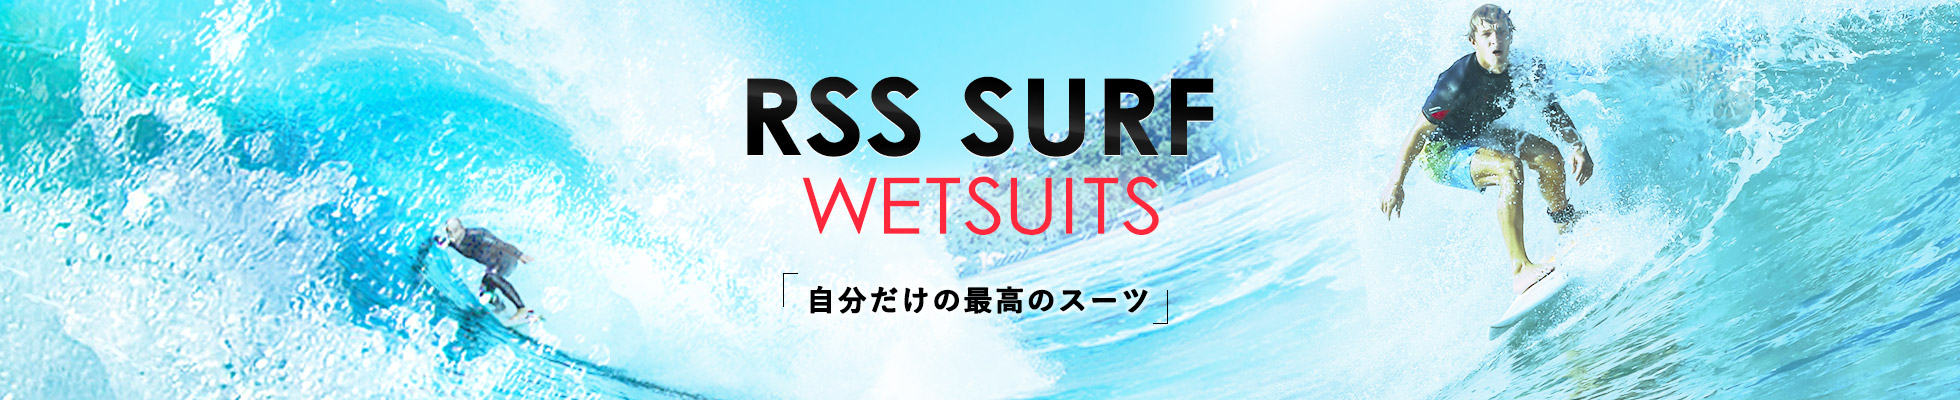 RSS SURF